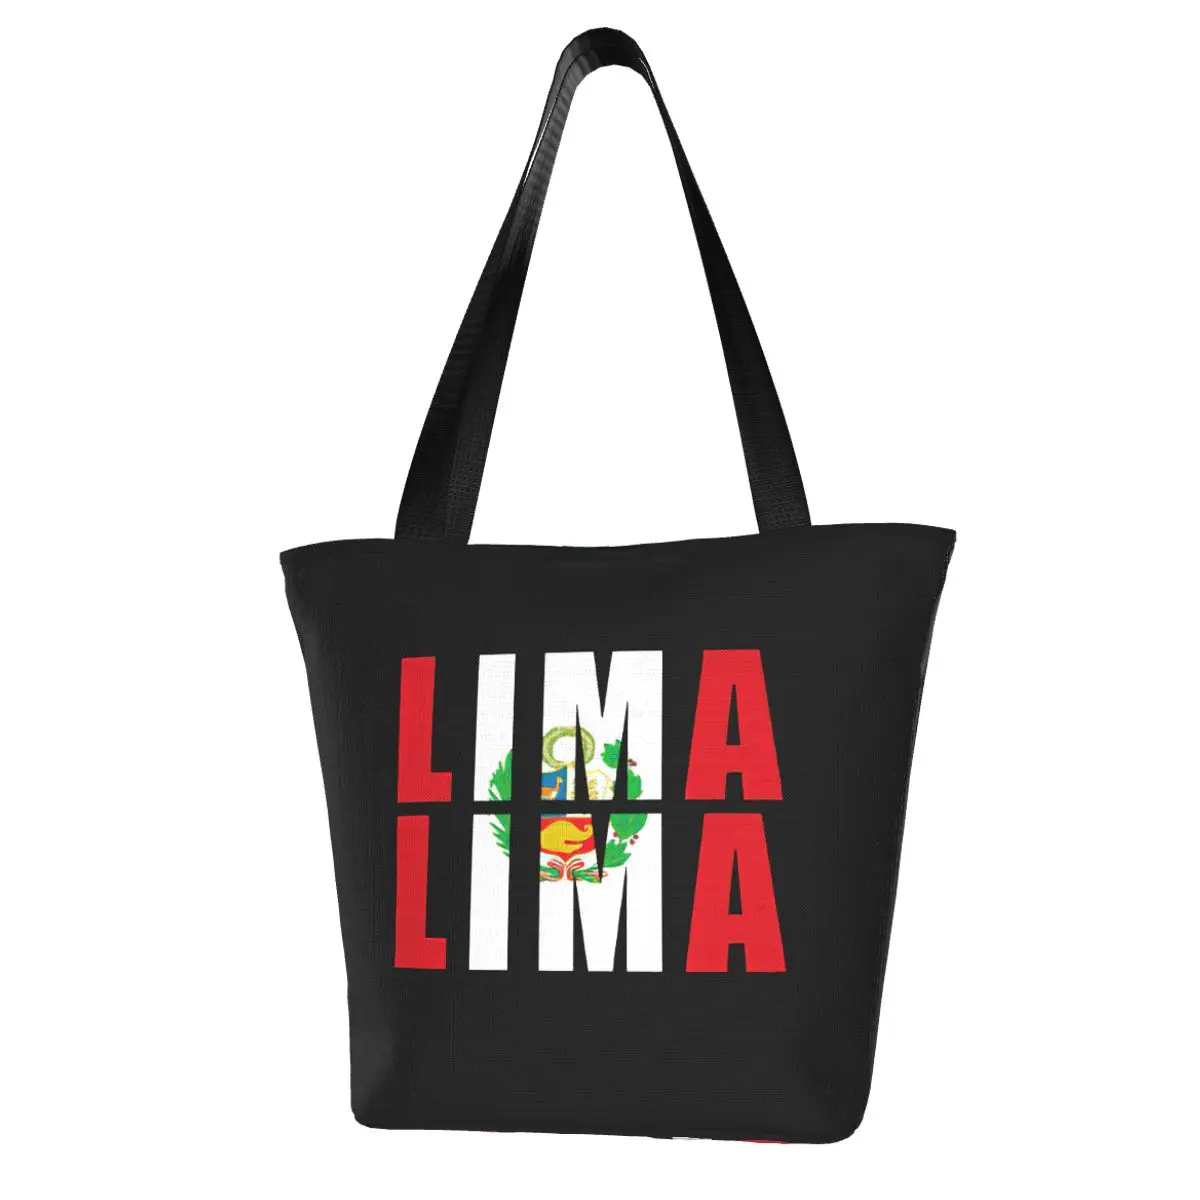 Lima Peru Shopping Bag Aesthetic Cloth Outdoor Handbag Female Fashion Bags